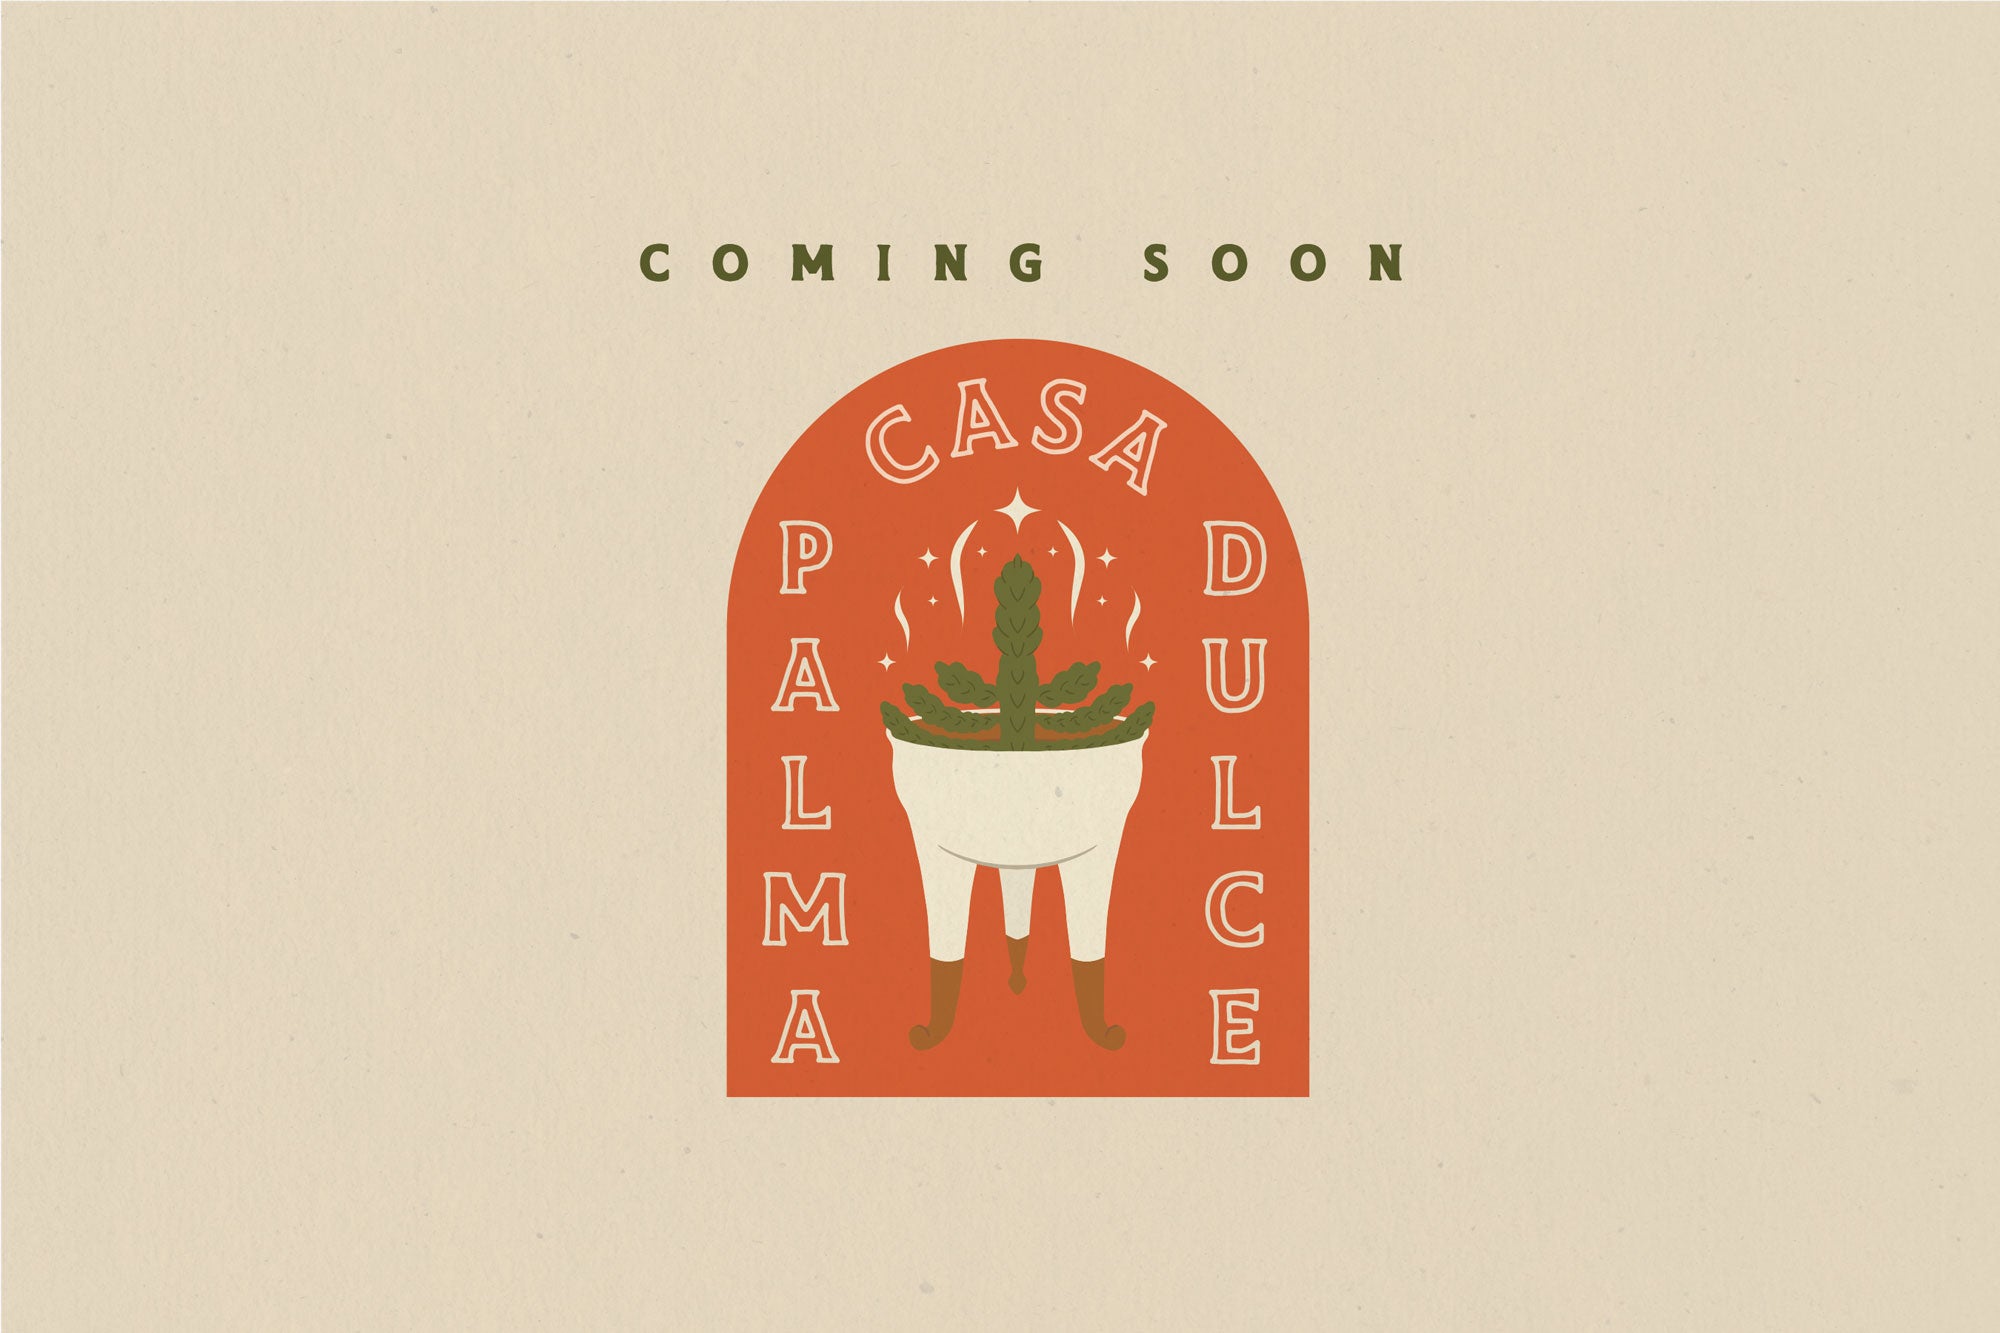 Coming Soon Casa Palma Dulce